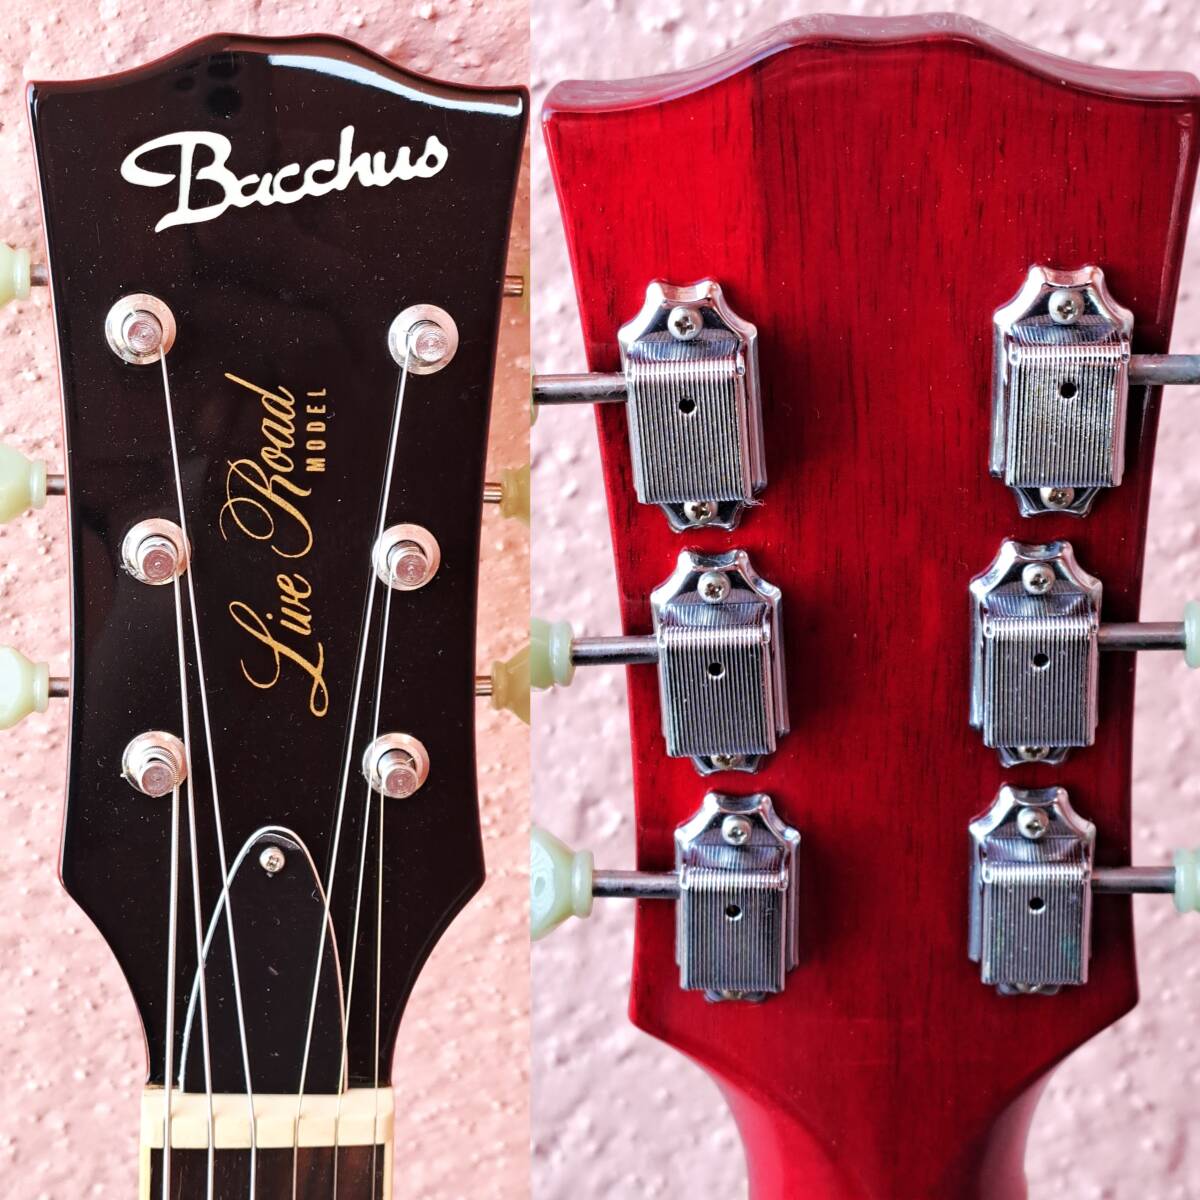 #Bacchus Les Paul Standard Live Road Flame Maple Bacchus Lespaul standard Cherry sun Burst Gibson Gibson 